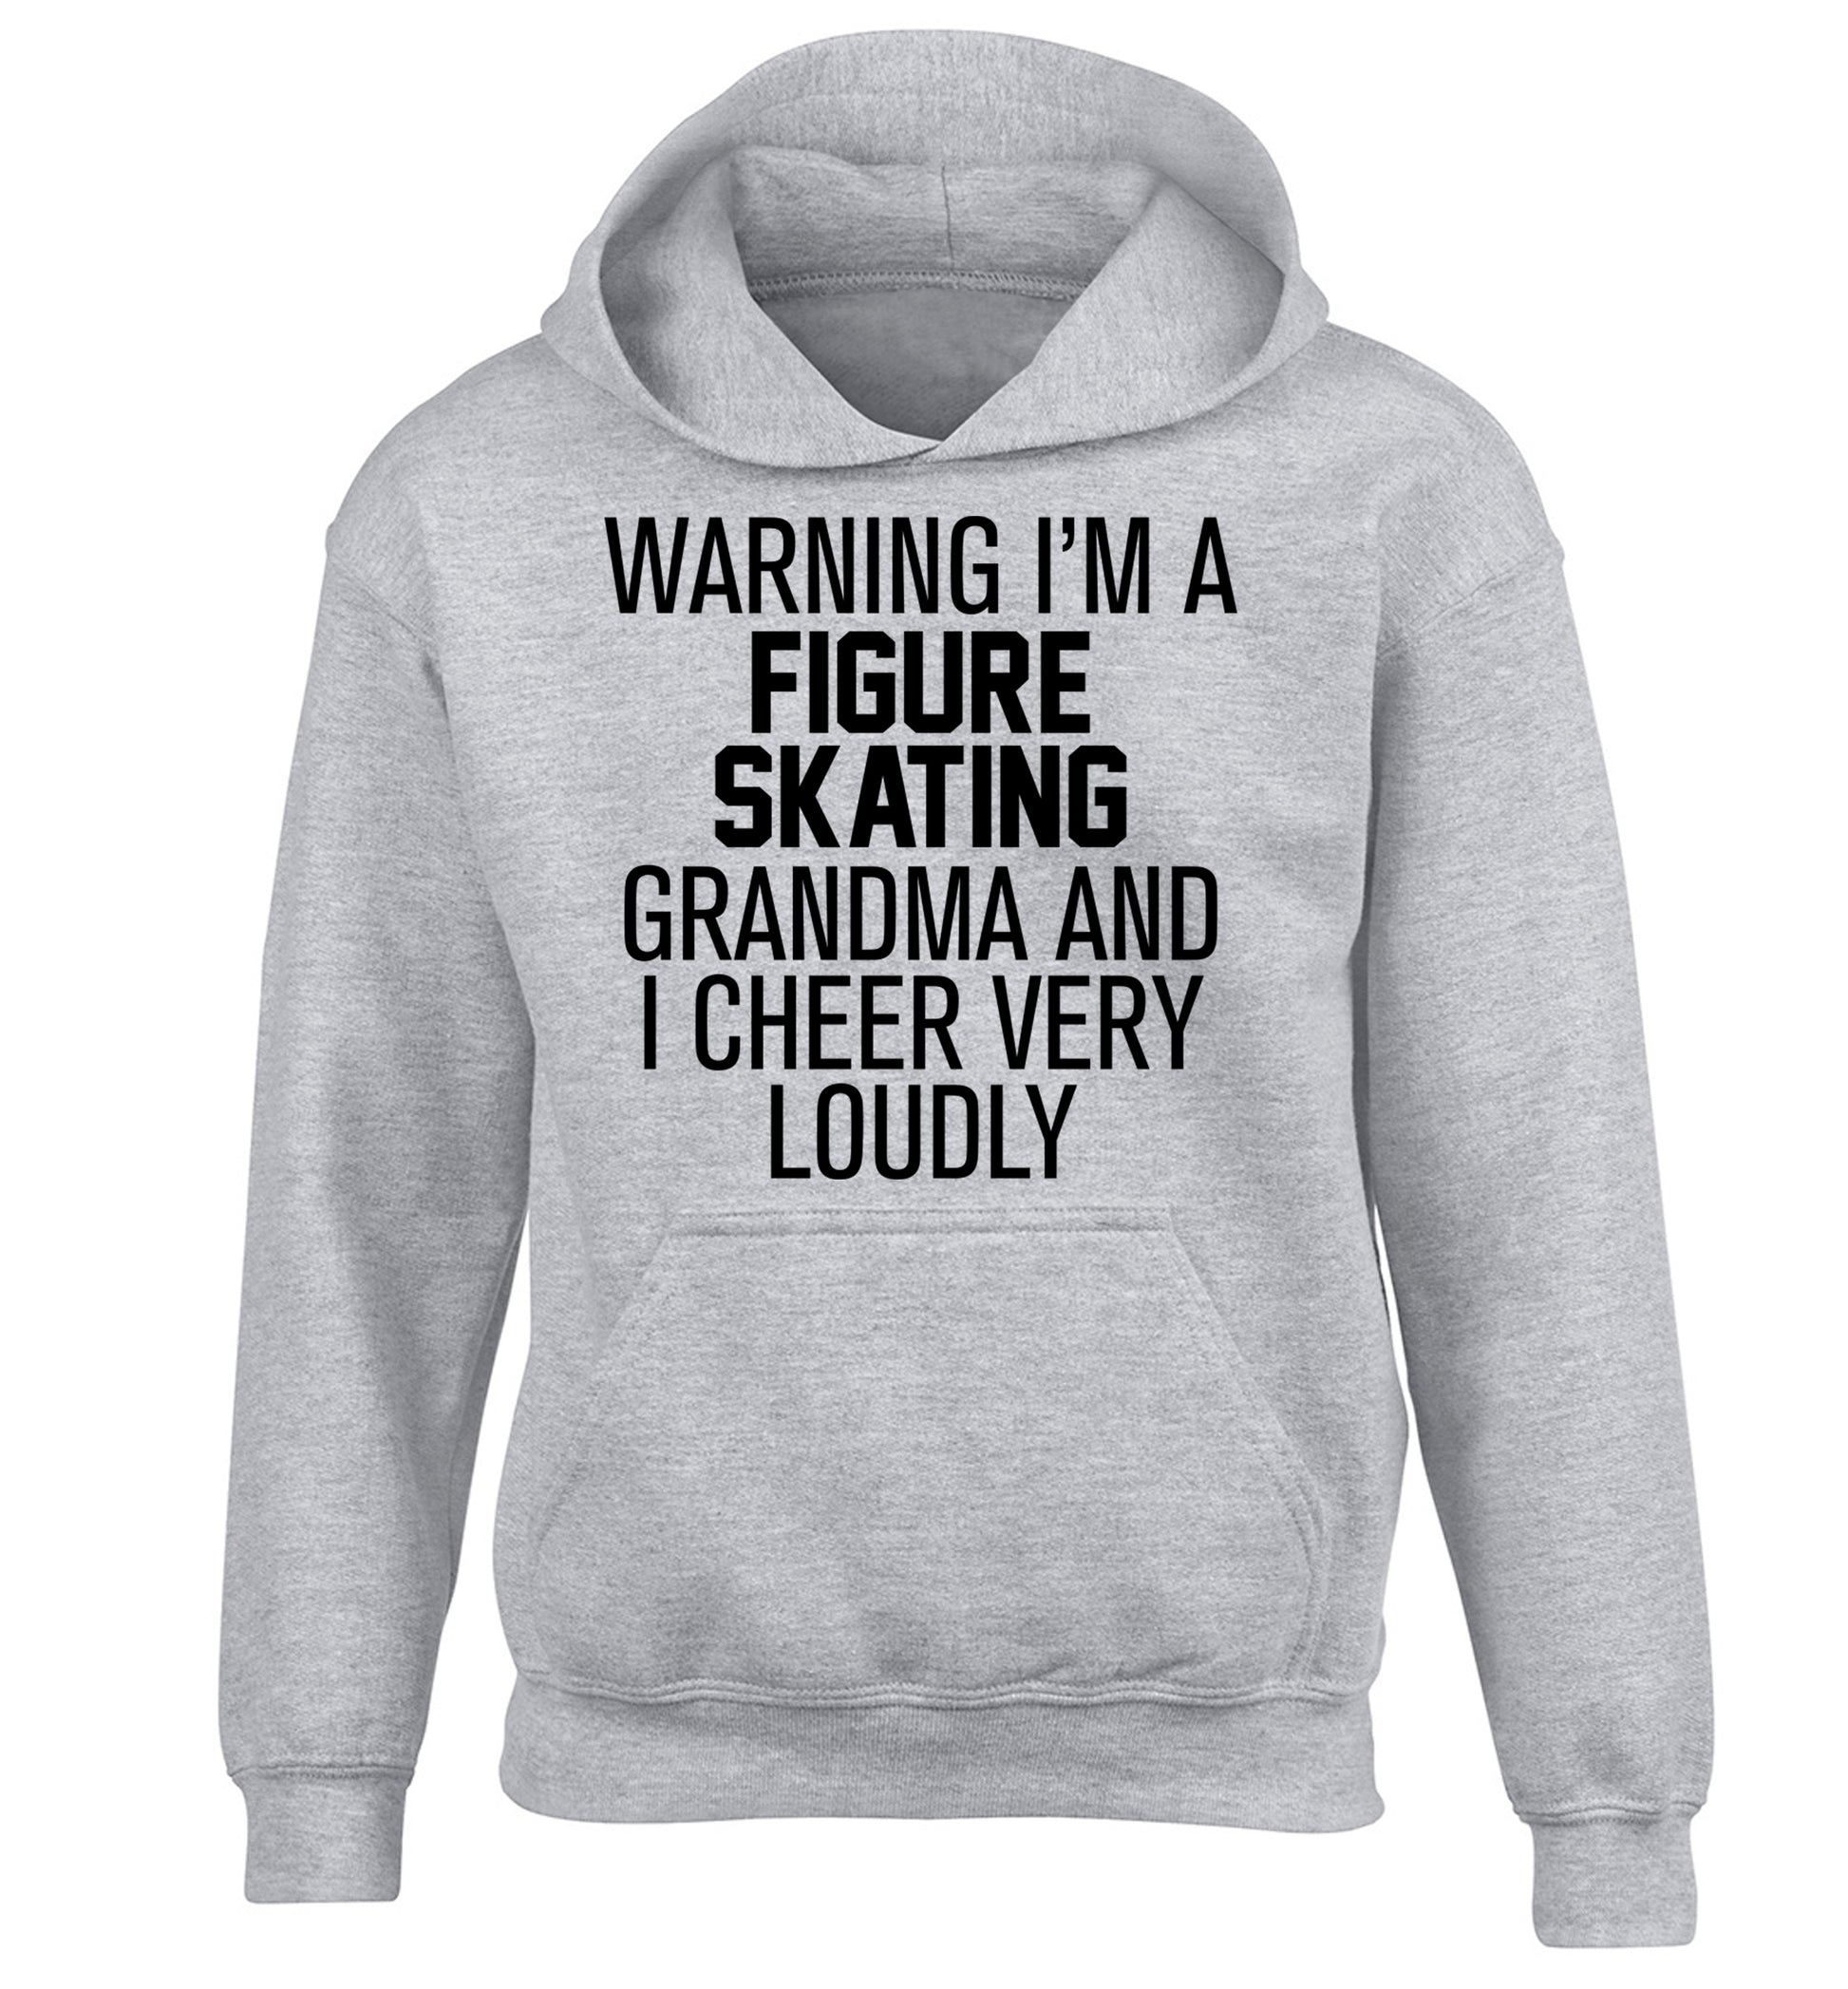 Warning I'm a figure skating grandma and I cheer very loudly children's grey hoodie 12-14 Years